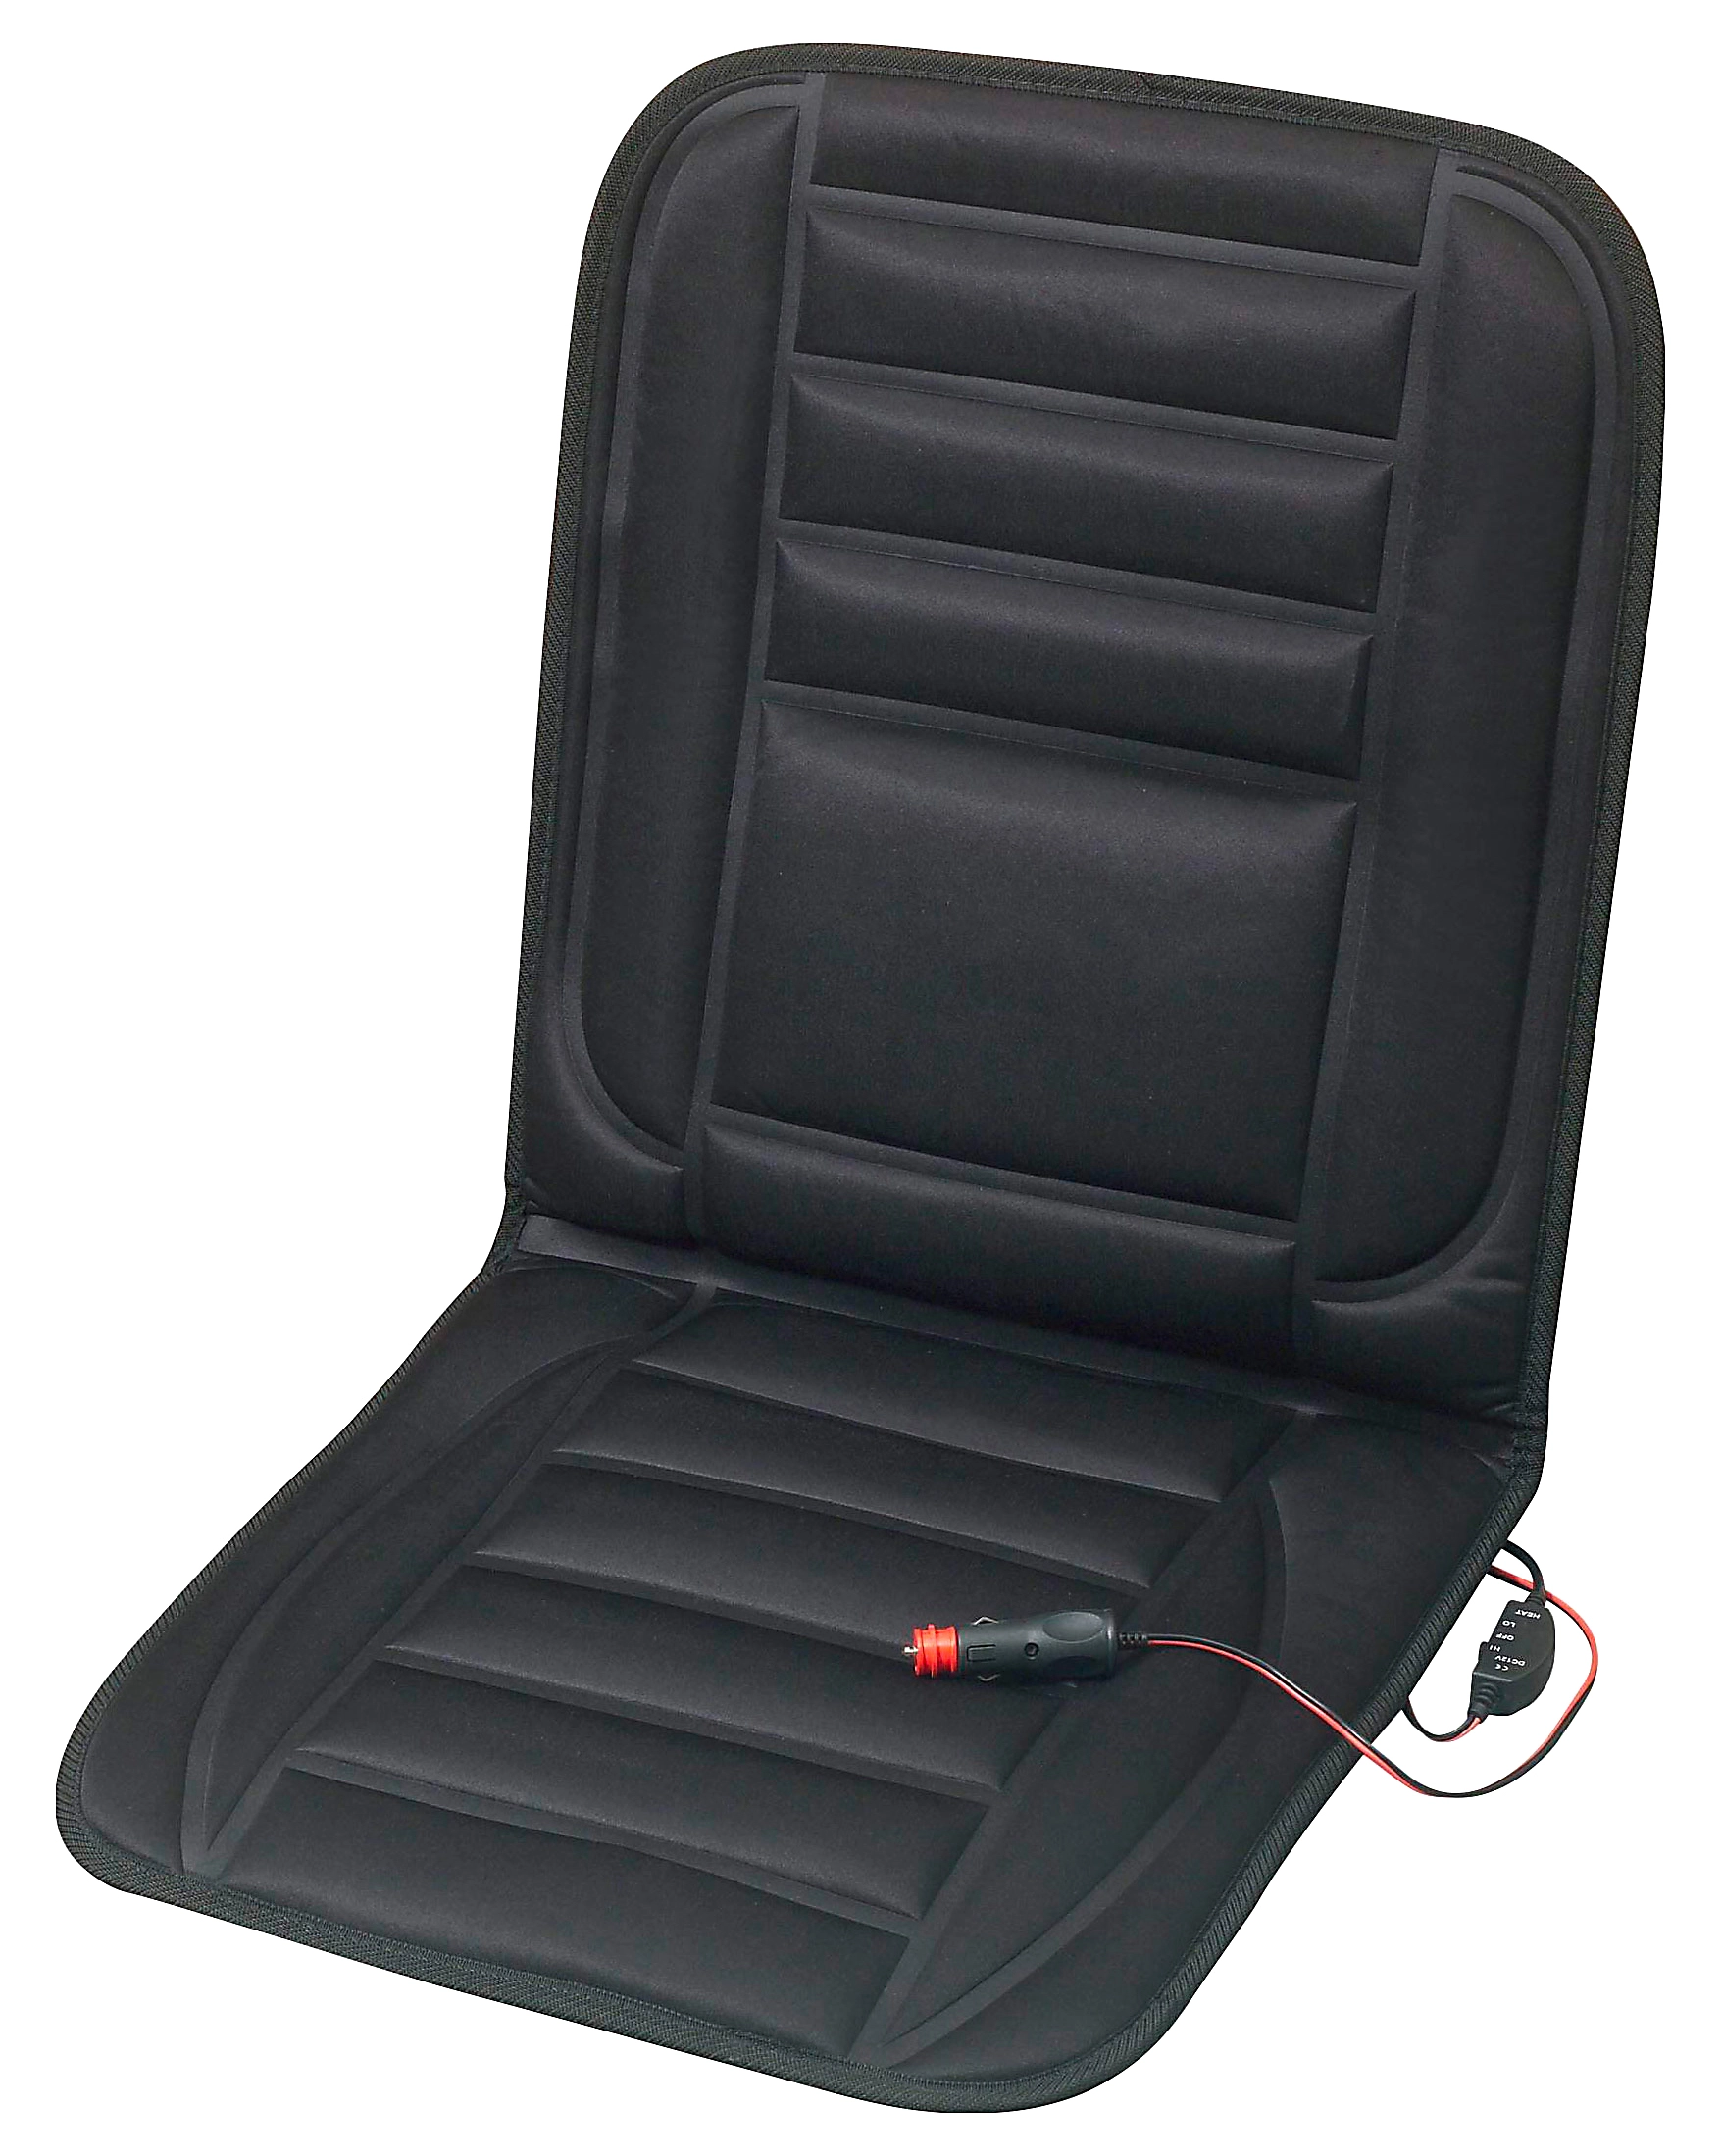 Auto-Sitzheizung Comfort 12 V kaufen bei OBI